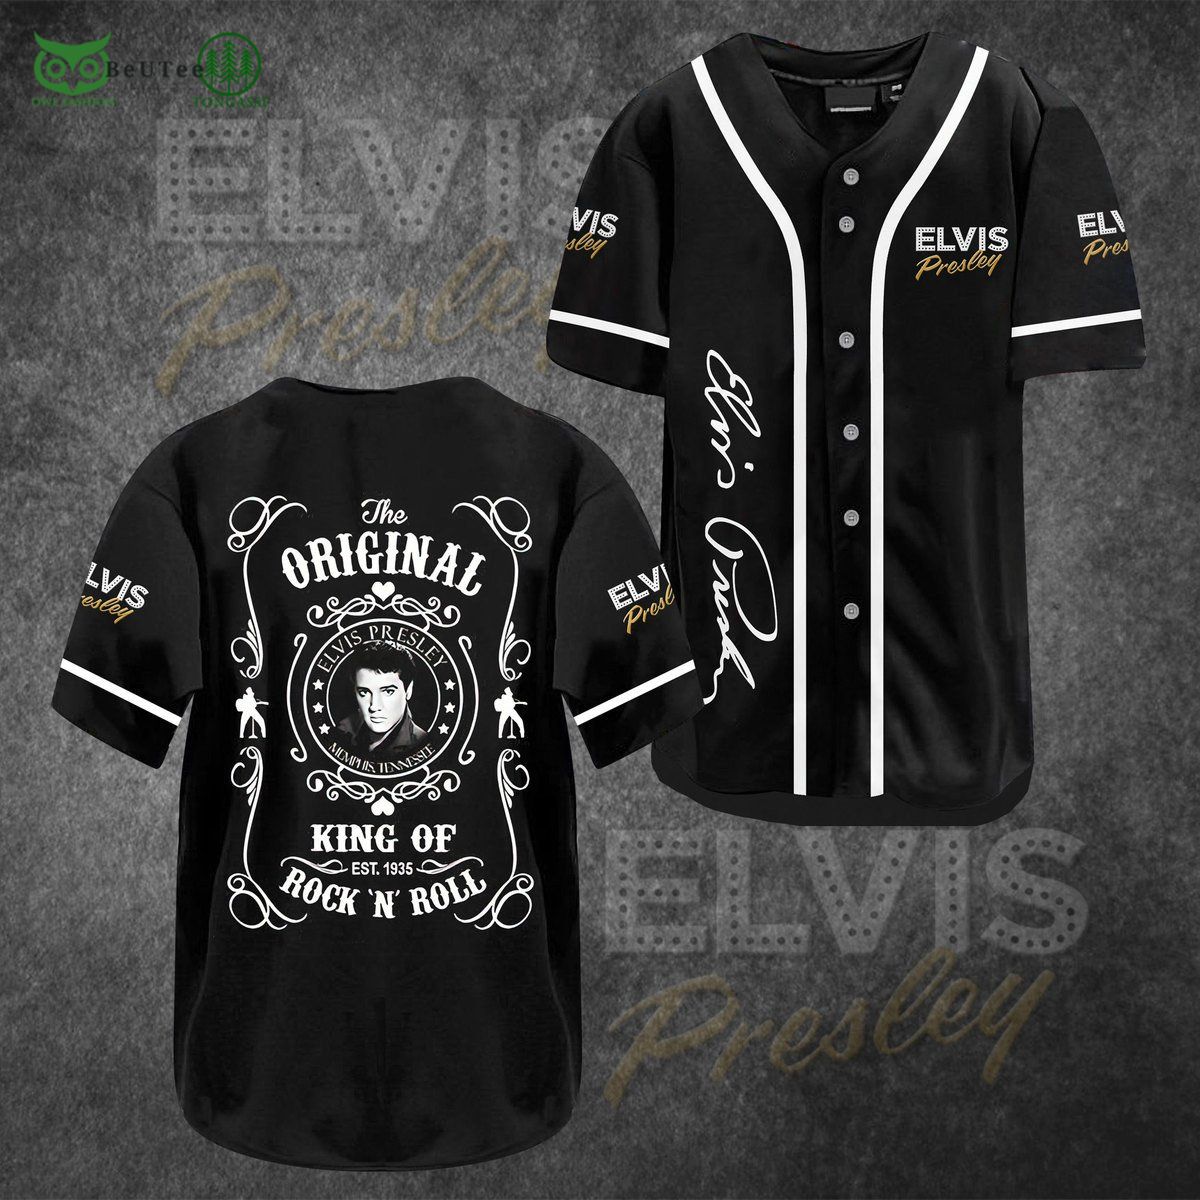 original rock n roll king elvis presley baseball jersey shirt 1 PCOGH